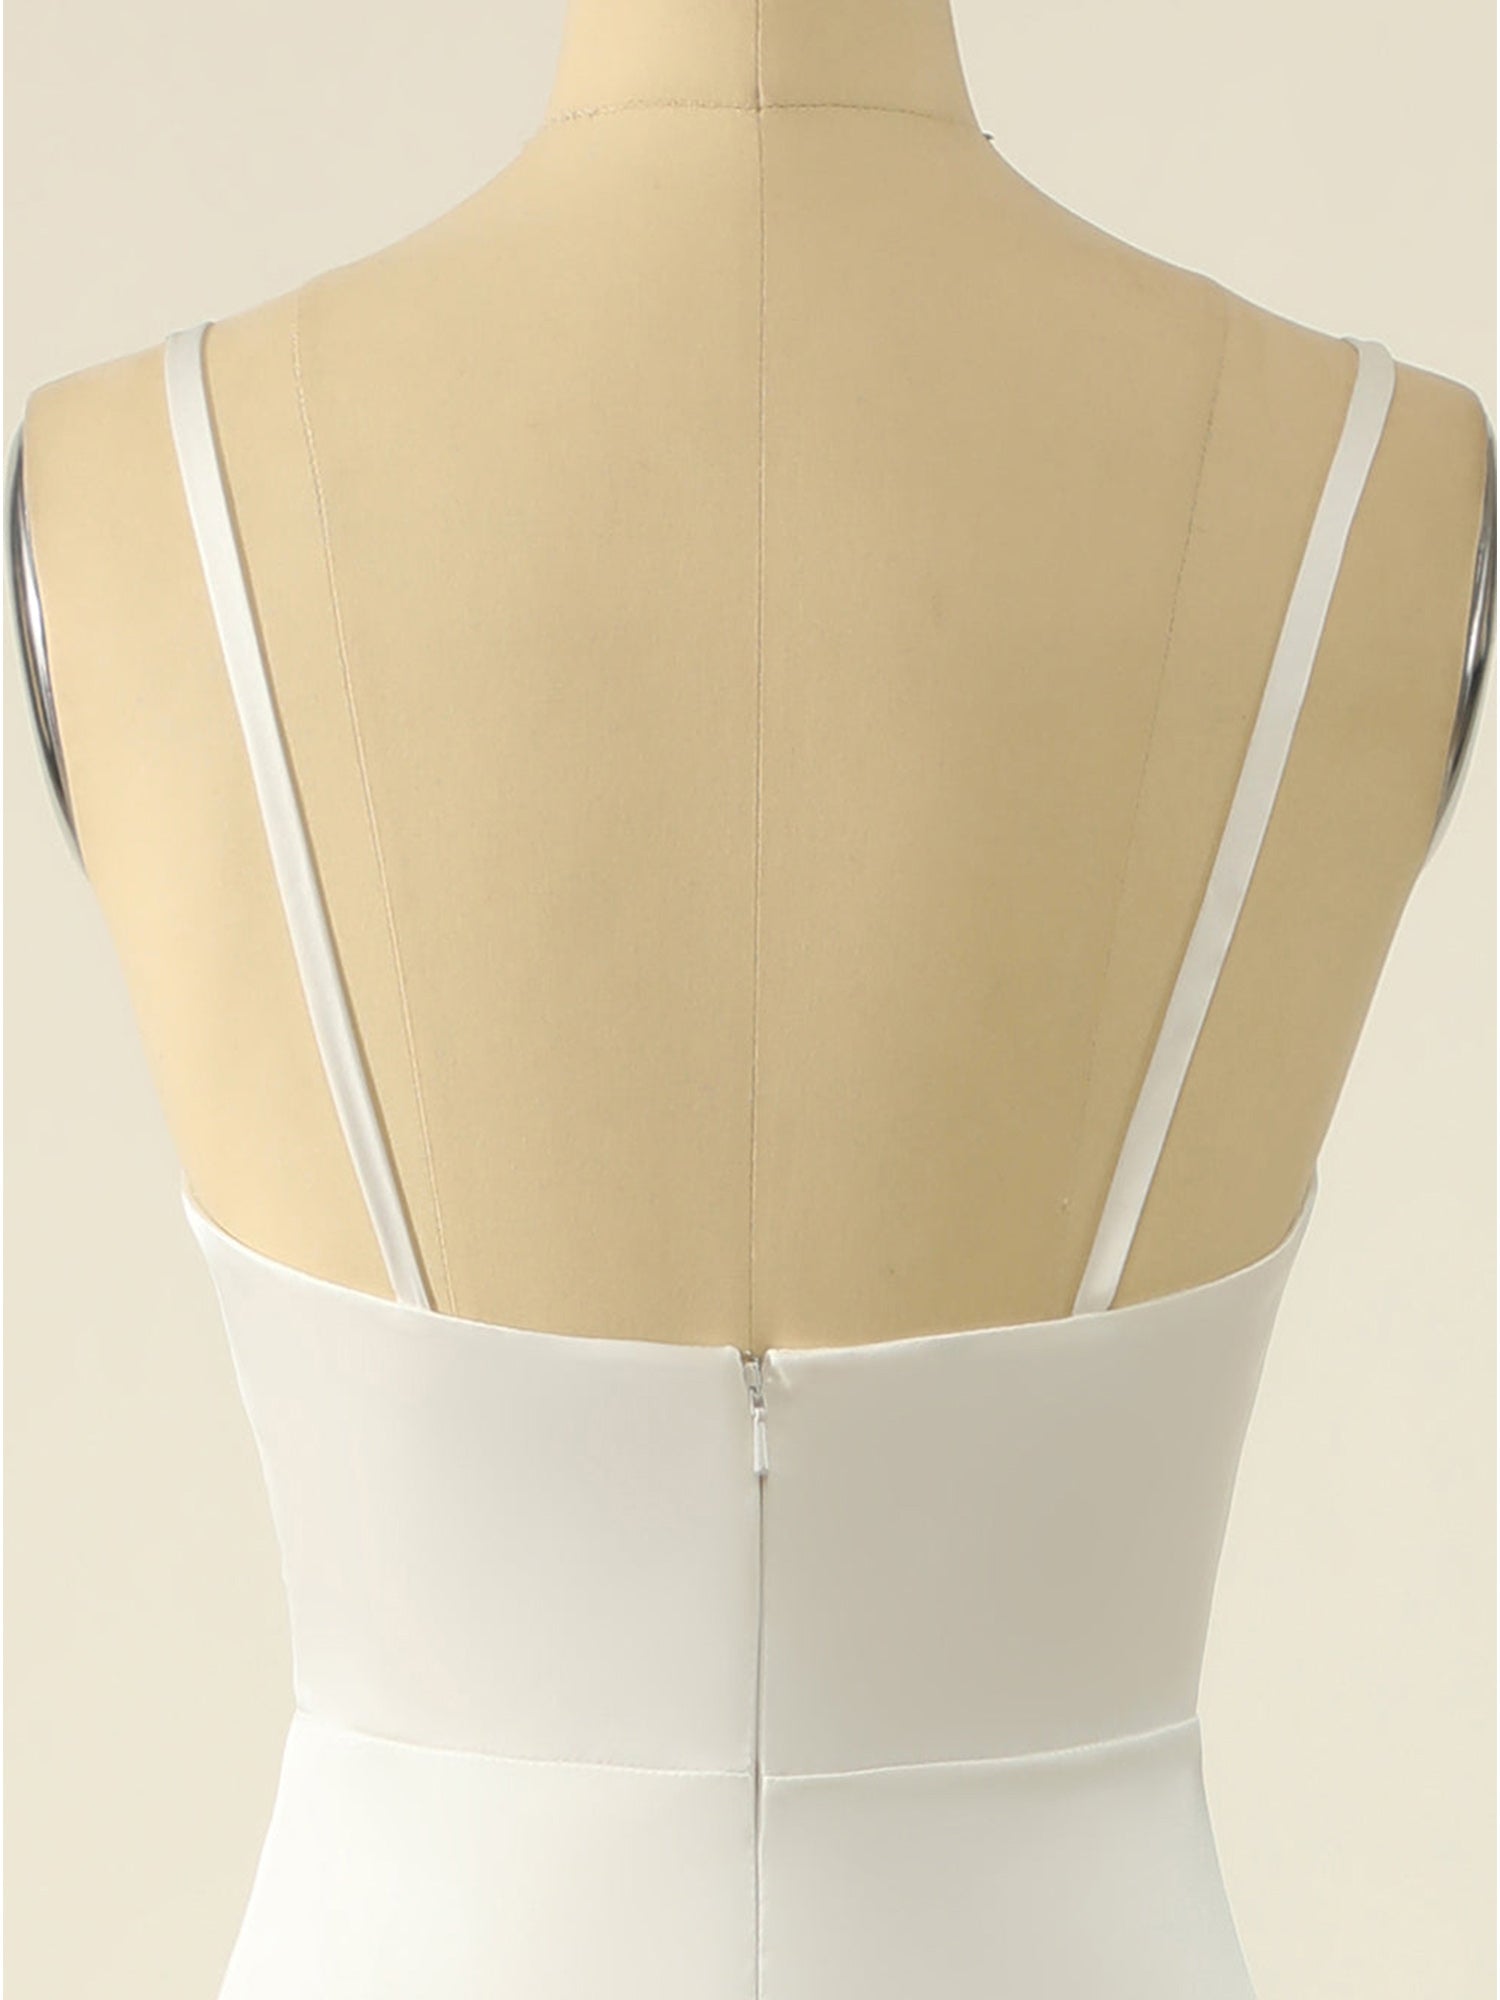 Stretch Satin V-Neck Half Sleeves Bridesmaid Dress| Plus Size | 60+ Colors